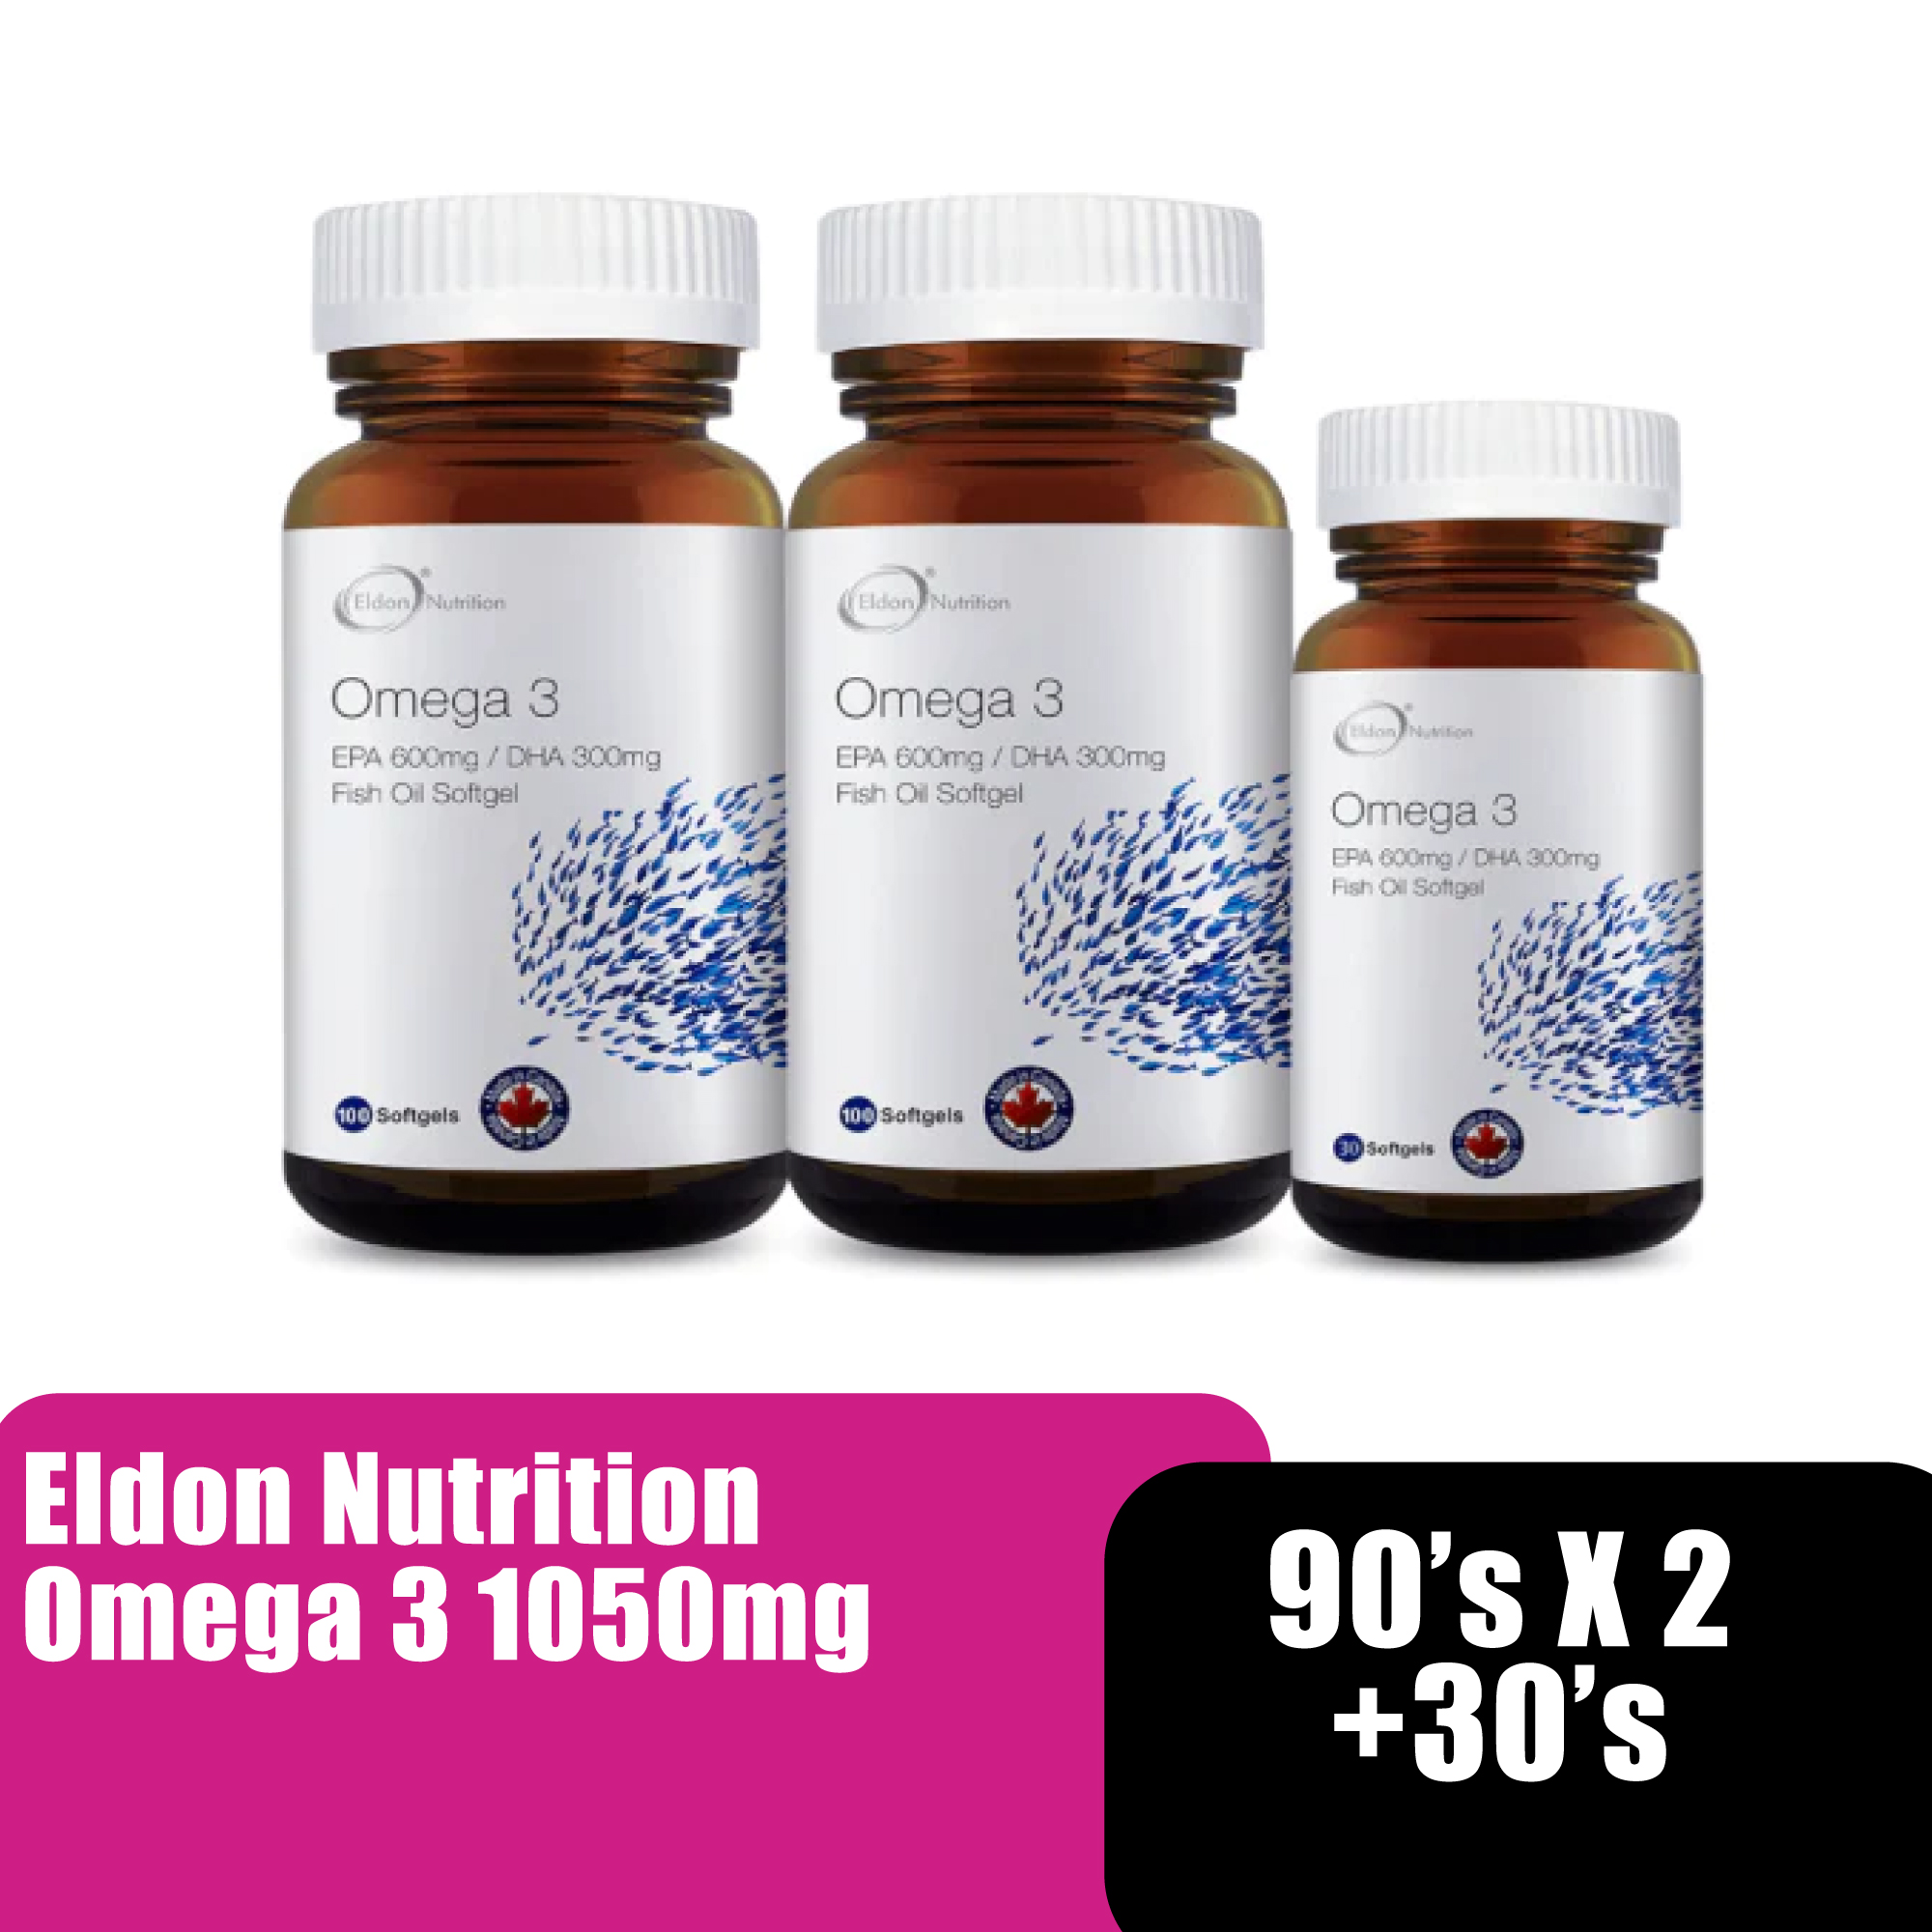 Elldon Nutrition Omega 3 Fish Oil Supplement,Memory Booster Brain Supplement,Heart Supplement (补脑)(1050mg x 90's x 2)+30